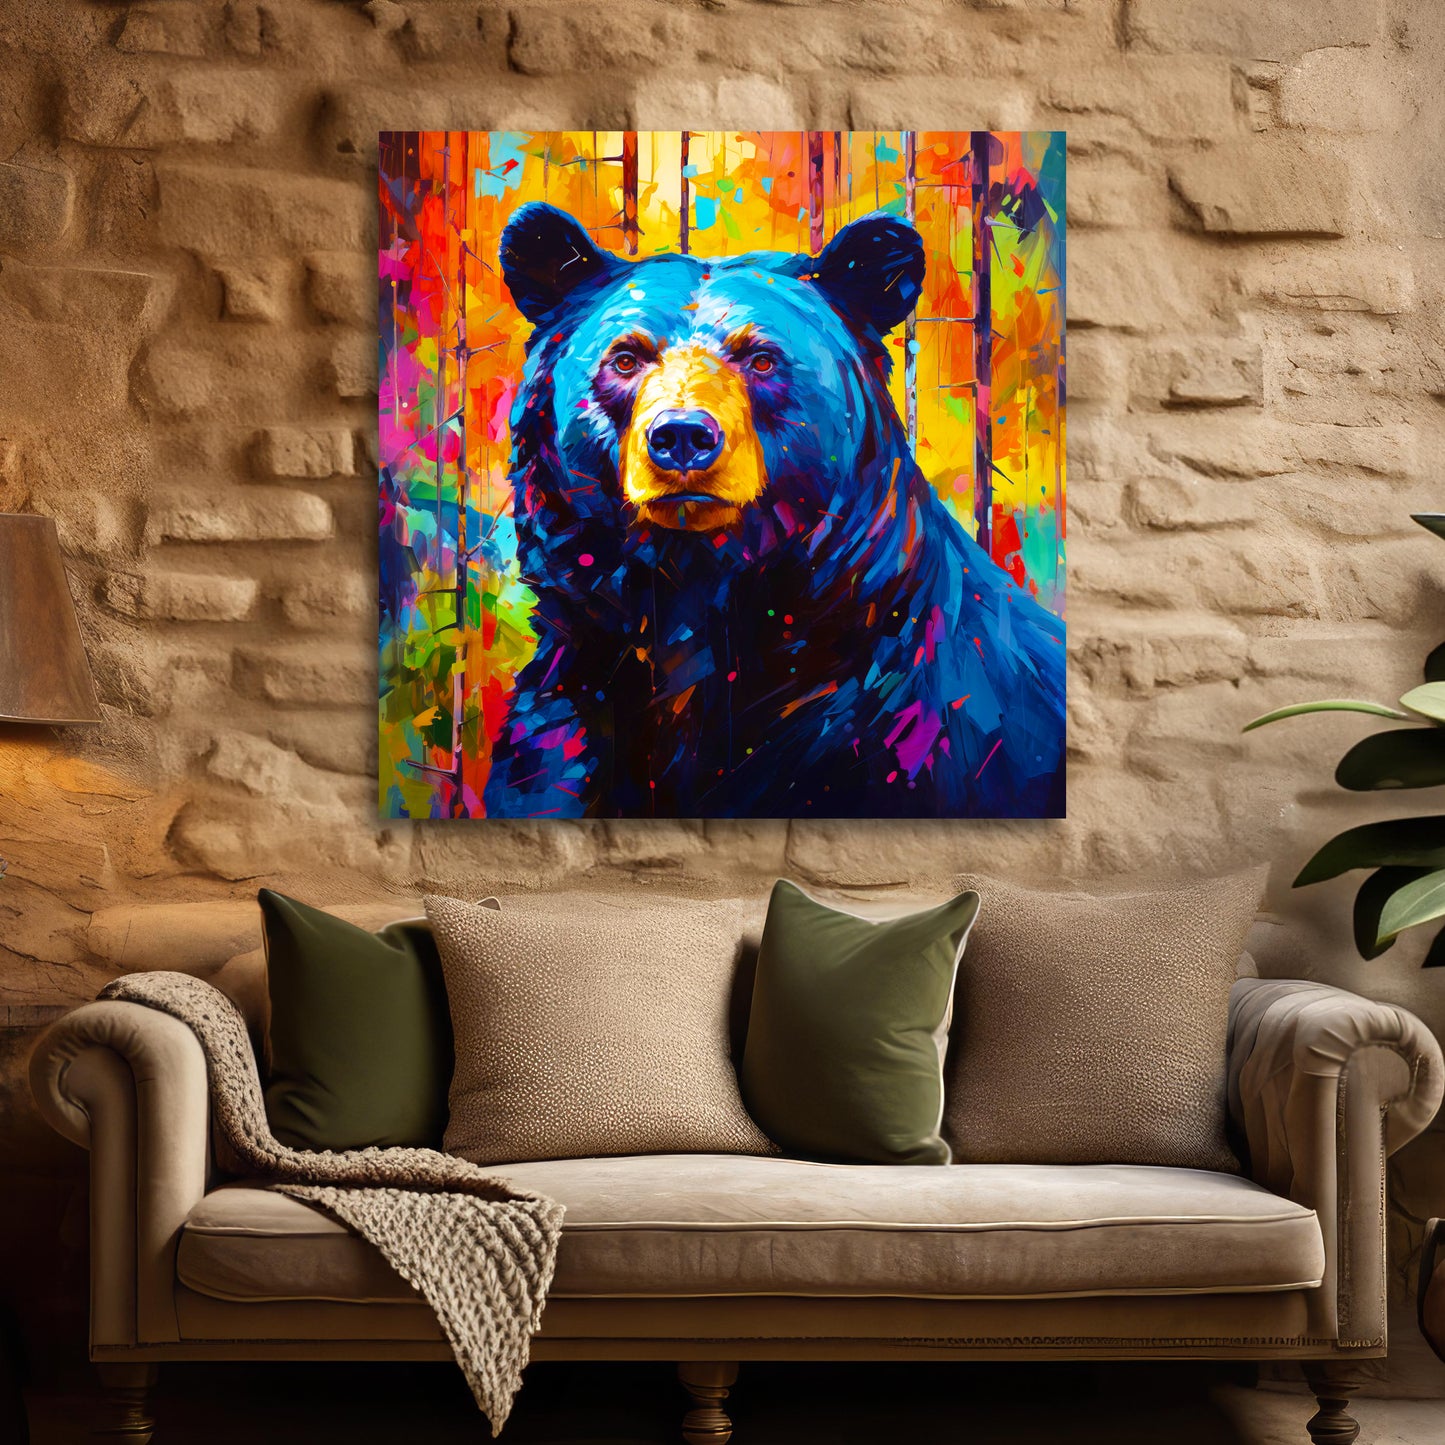 aesthetic black bear wall decor painting